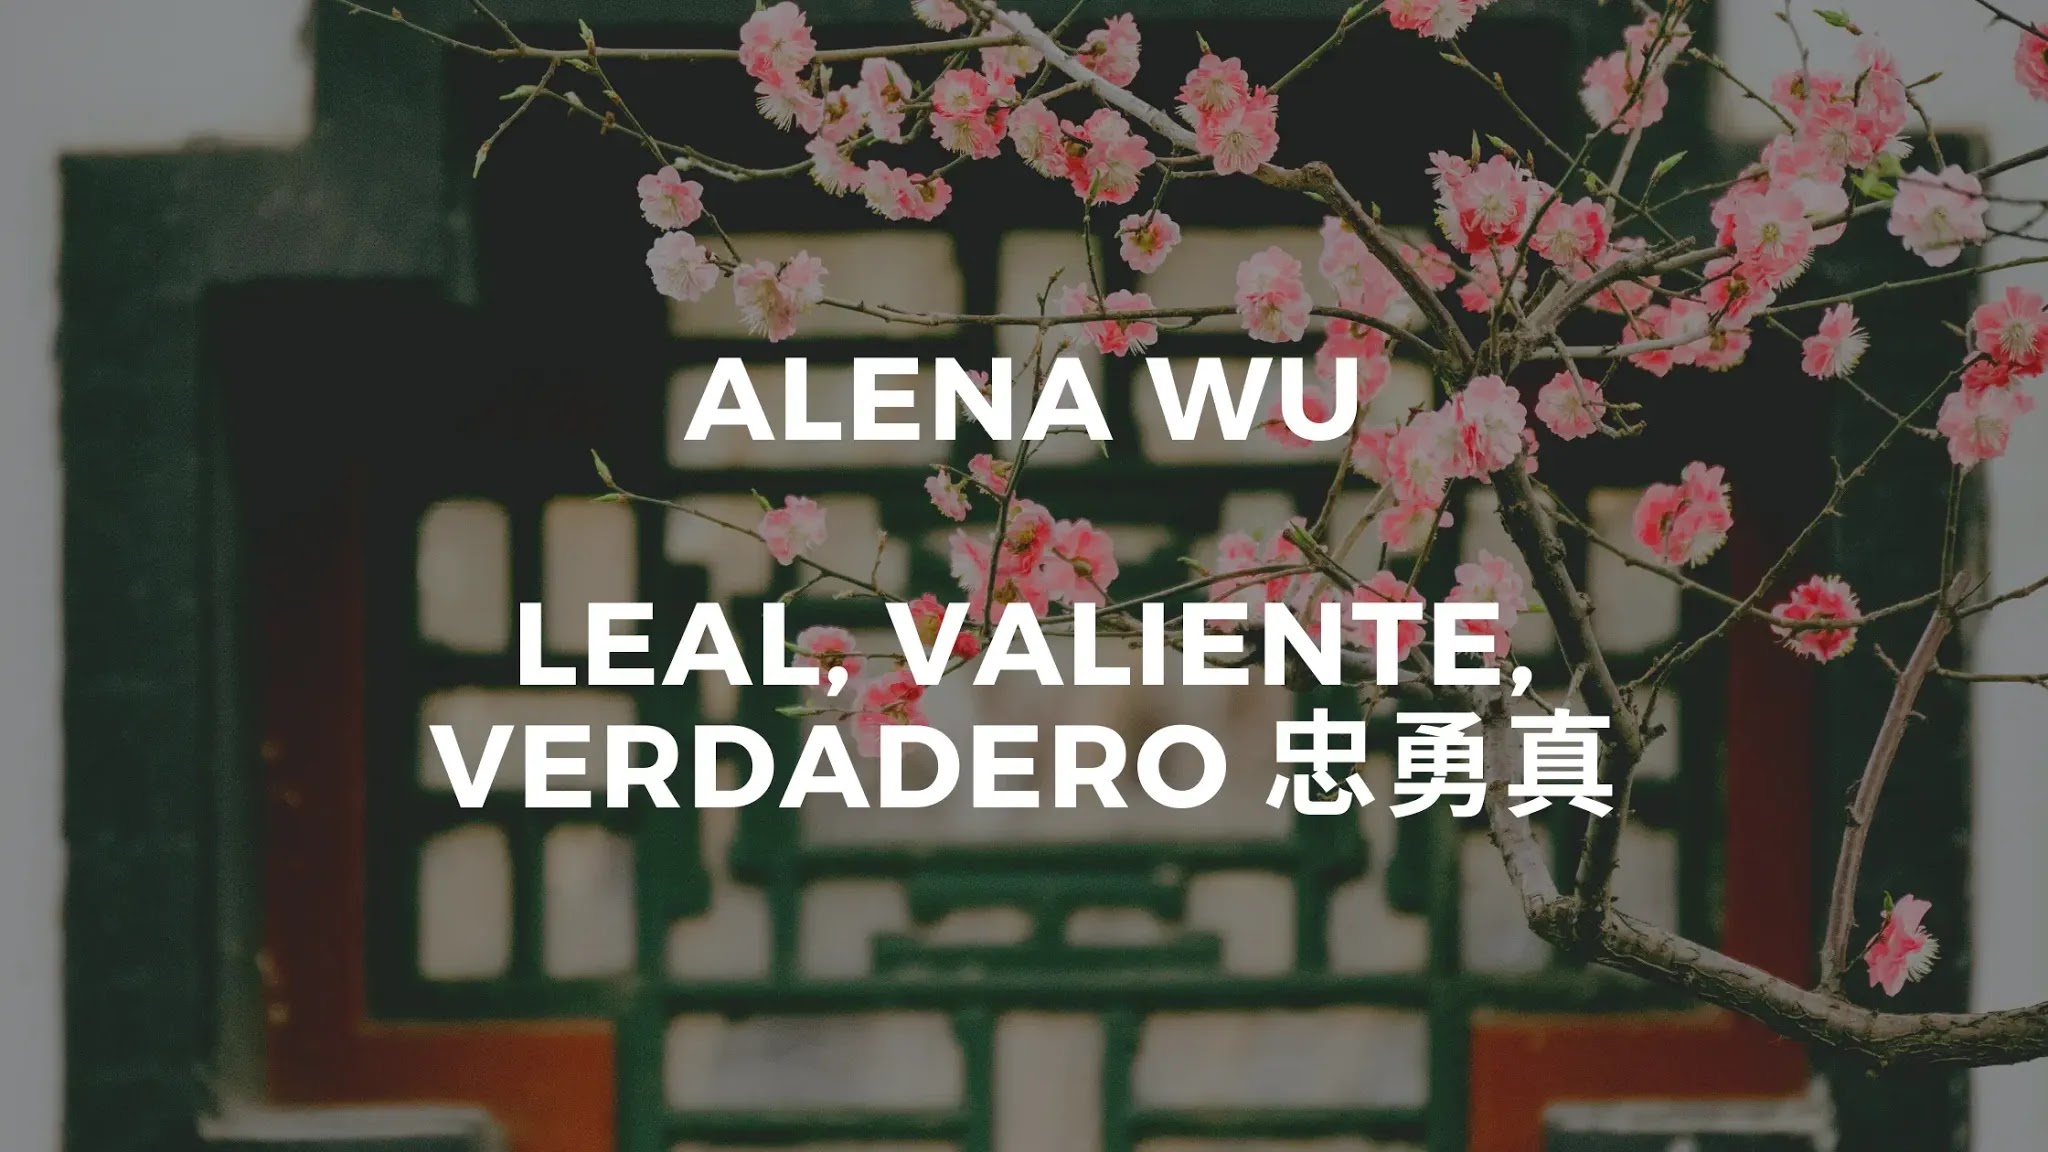 Alena Wu - Leal, valiente, verdadero